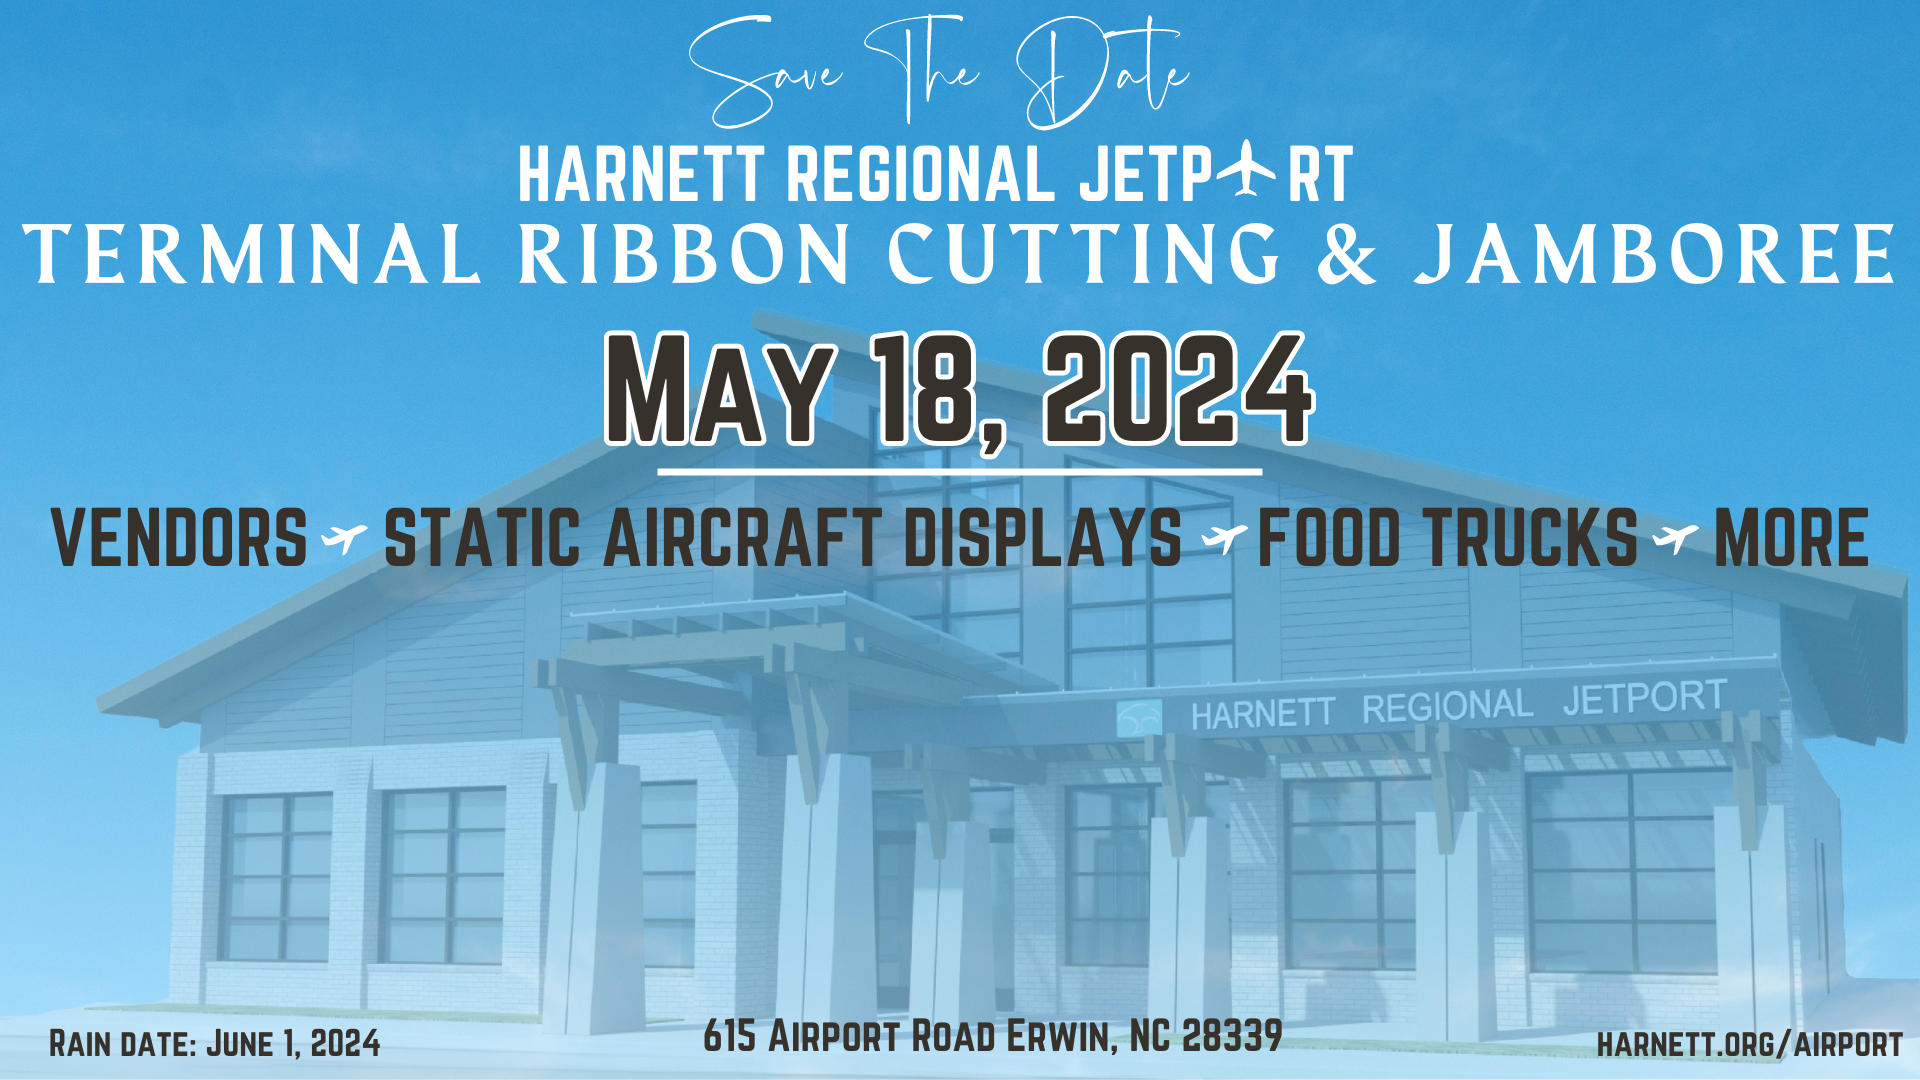 Harnett Regional Jetport Terminal Ribbon Cutting & Jamboree